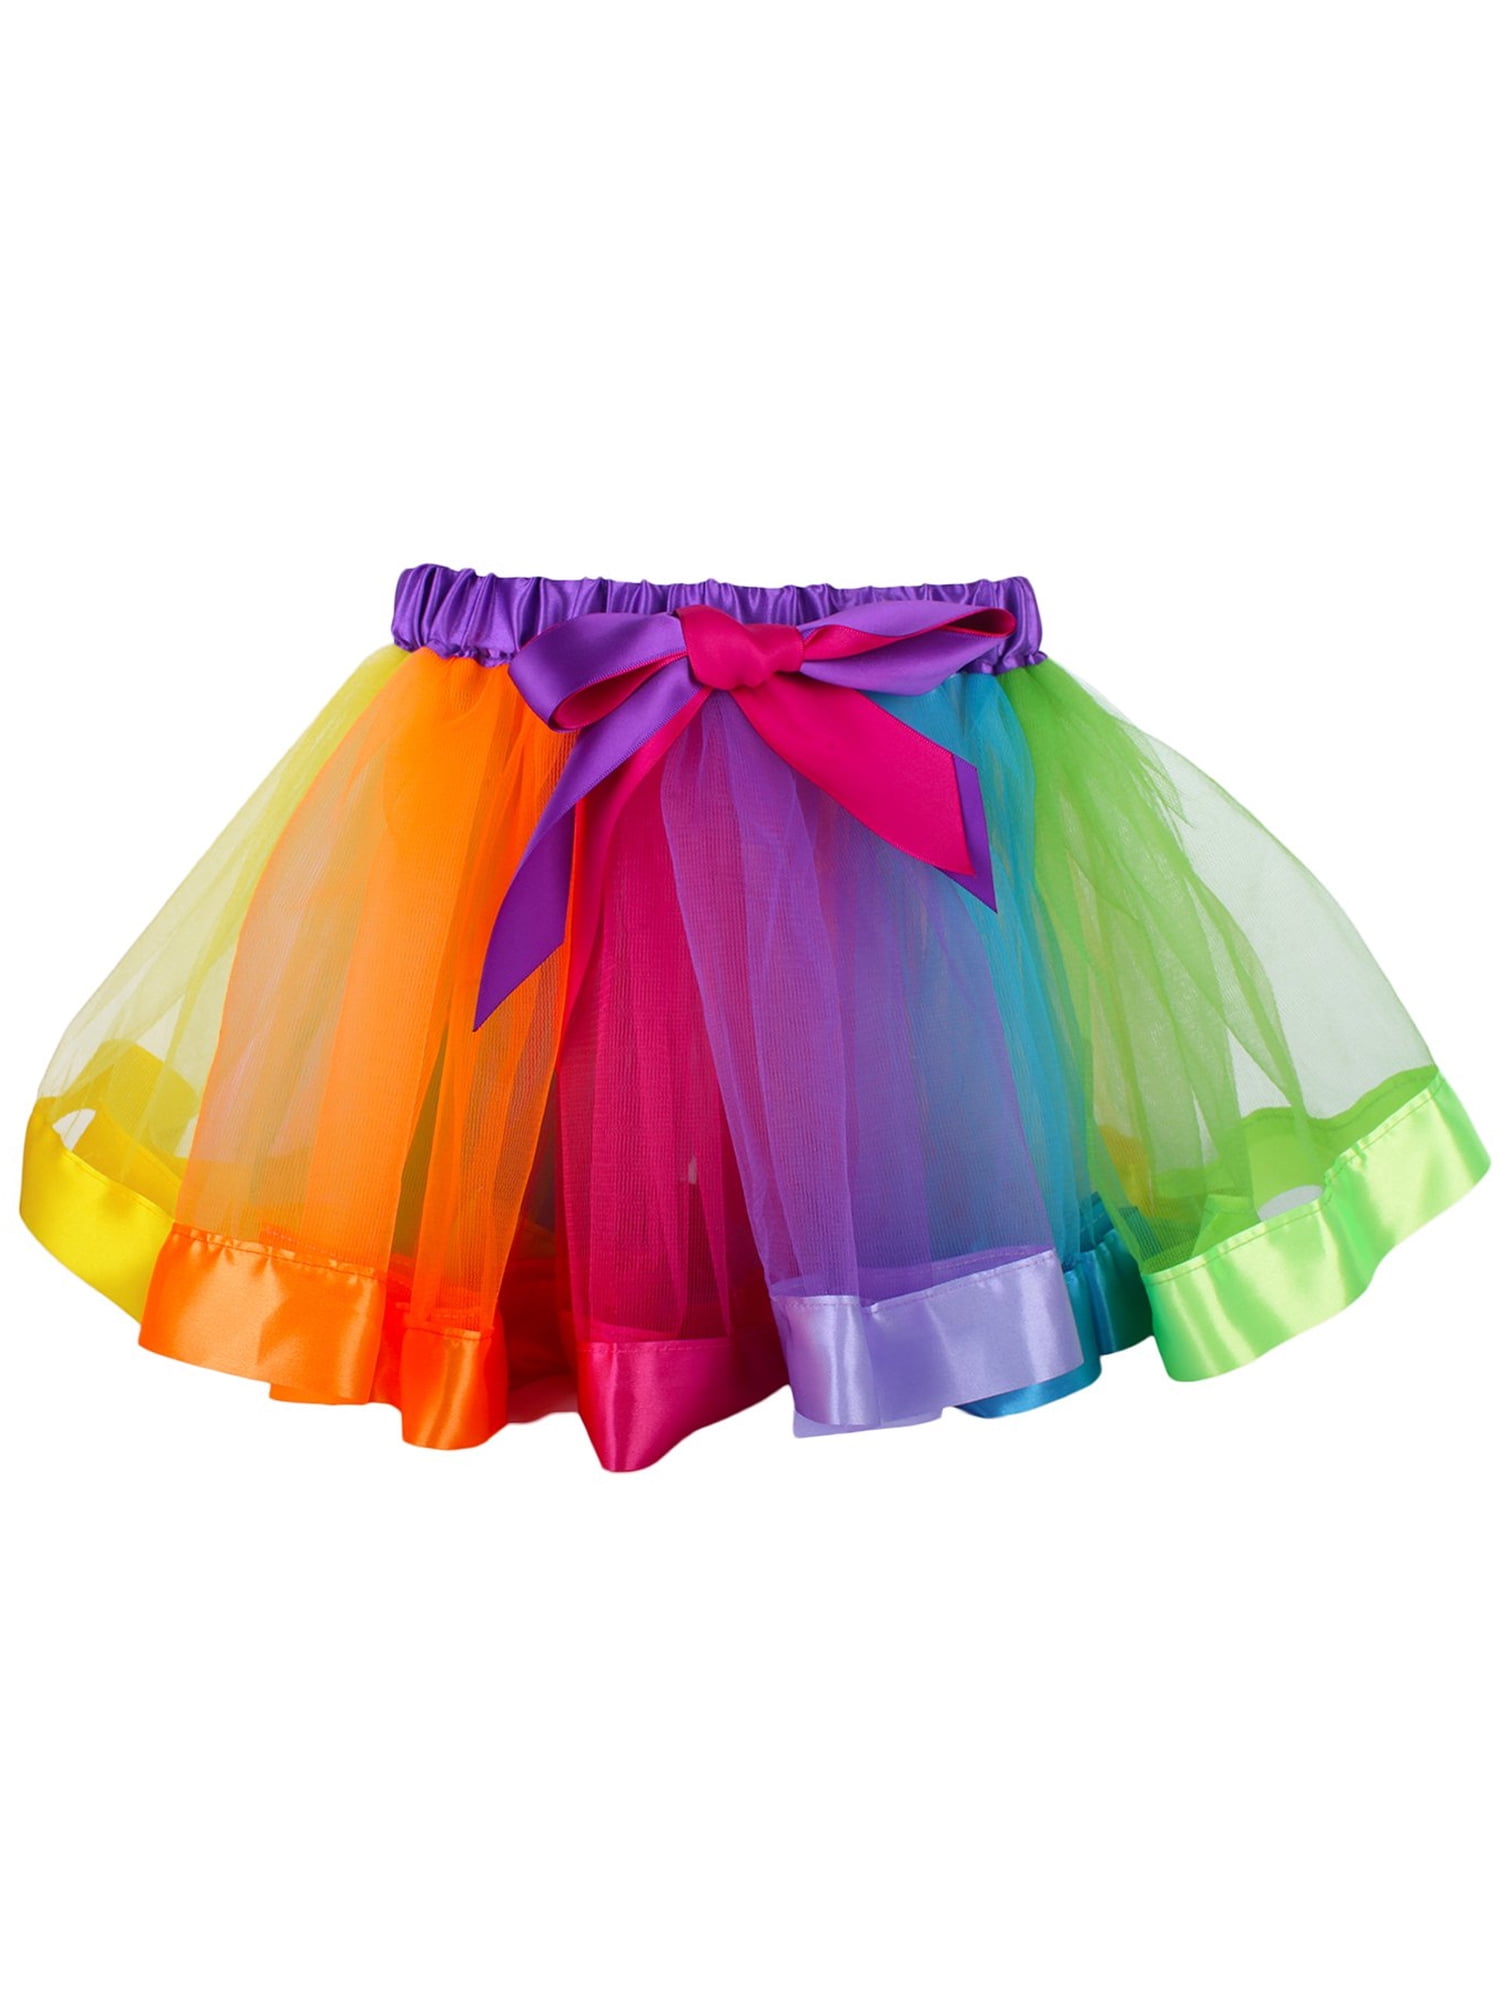 ezShe Little Girls Rainbow Tutu Skirt Layered Bubble Skirt 